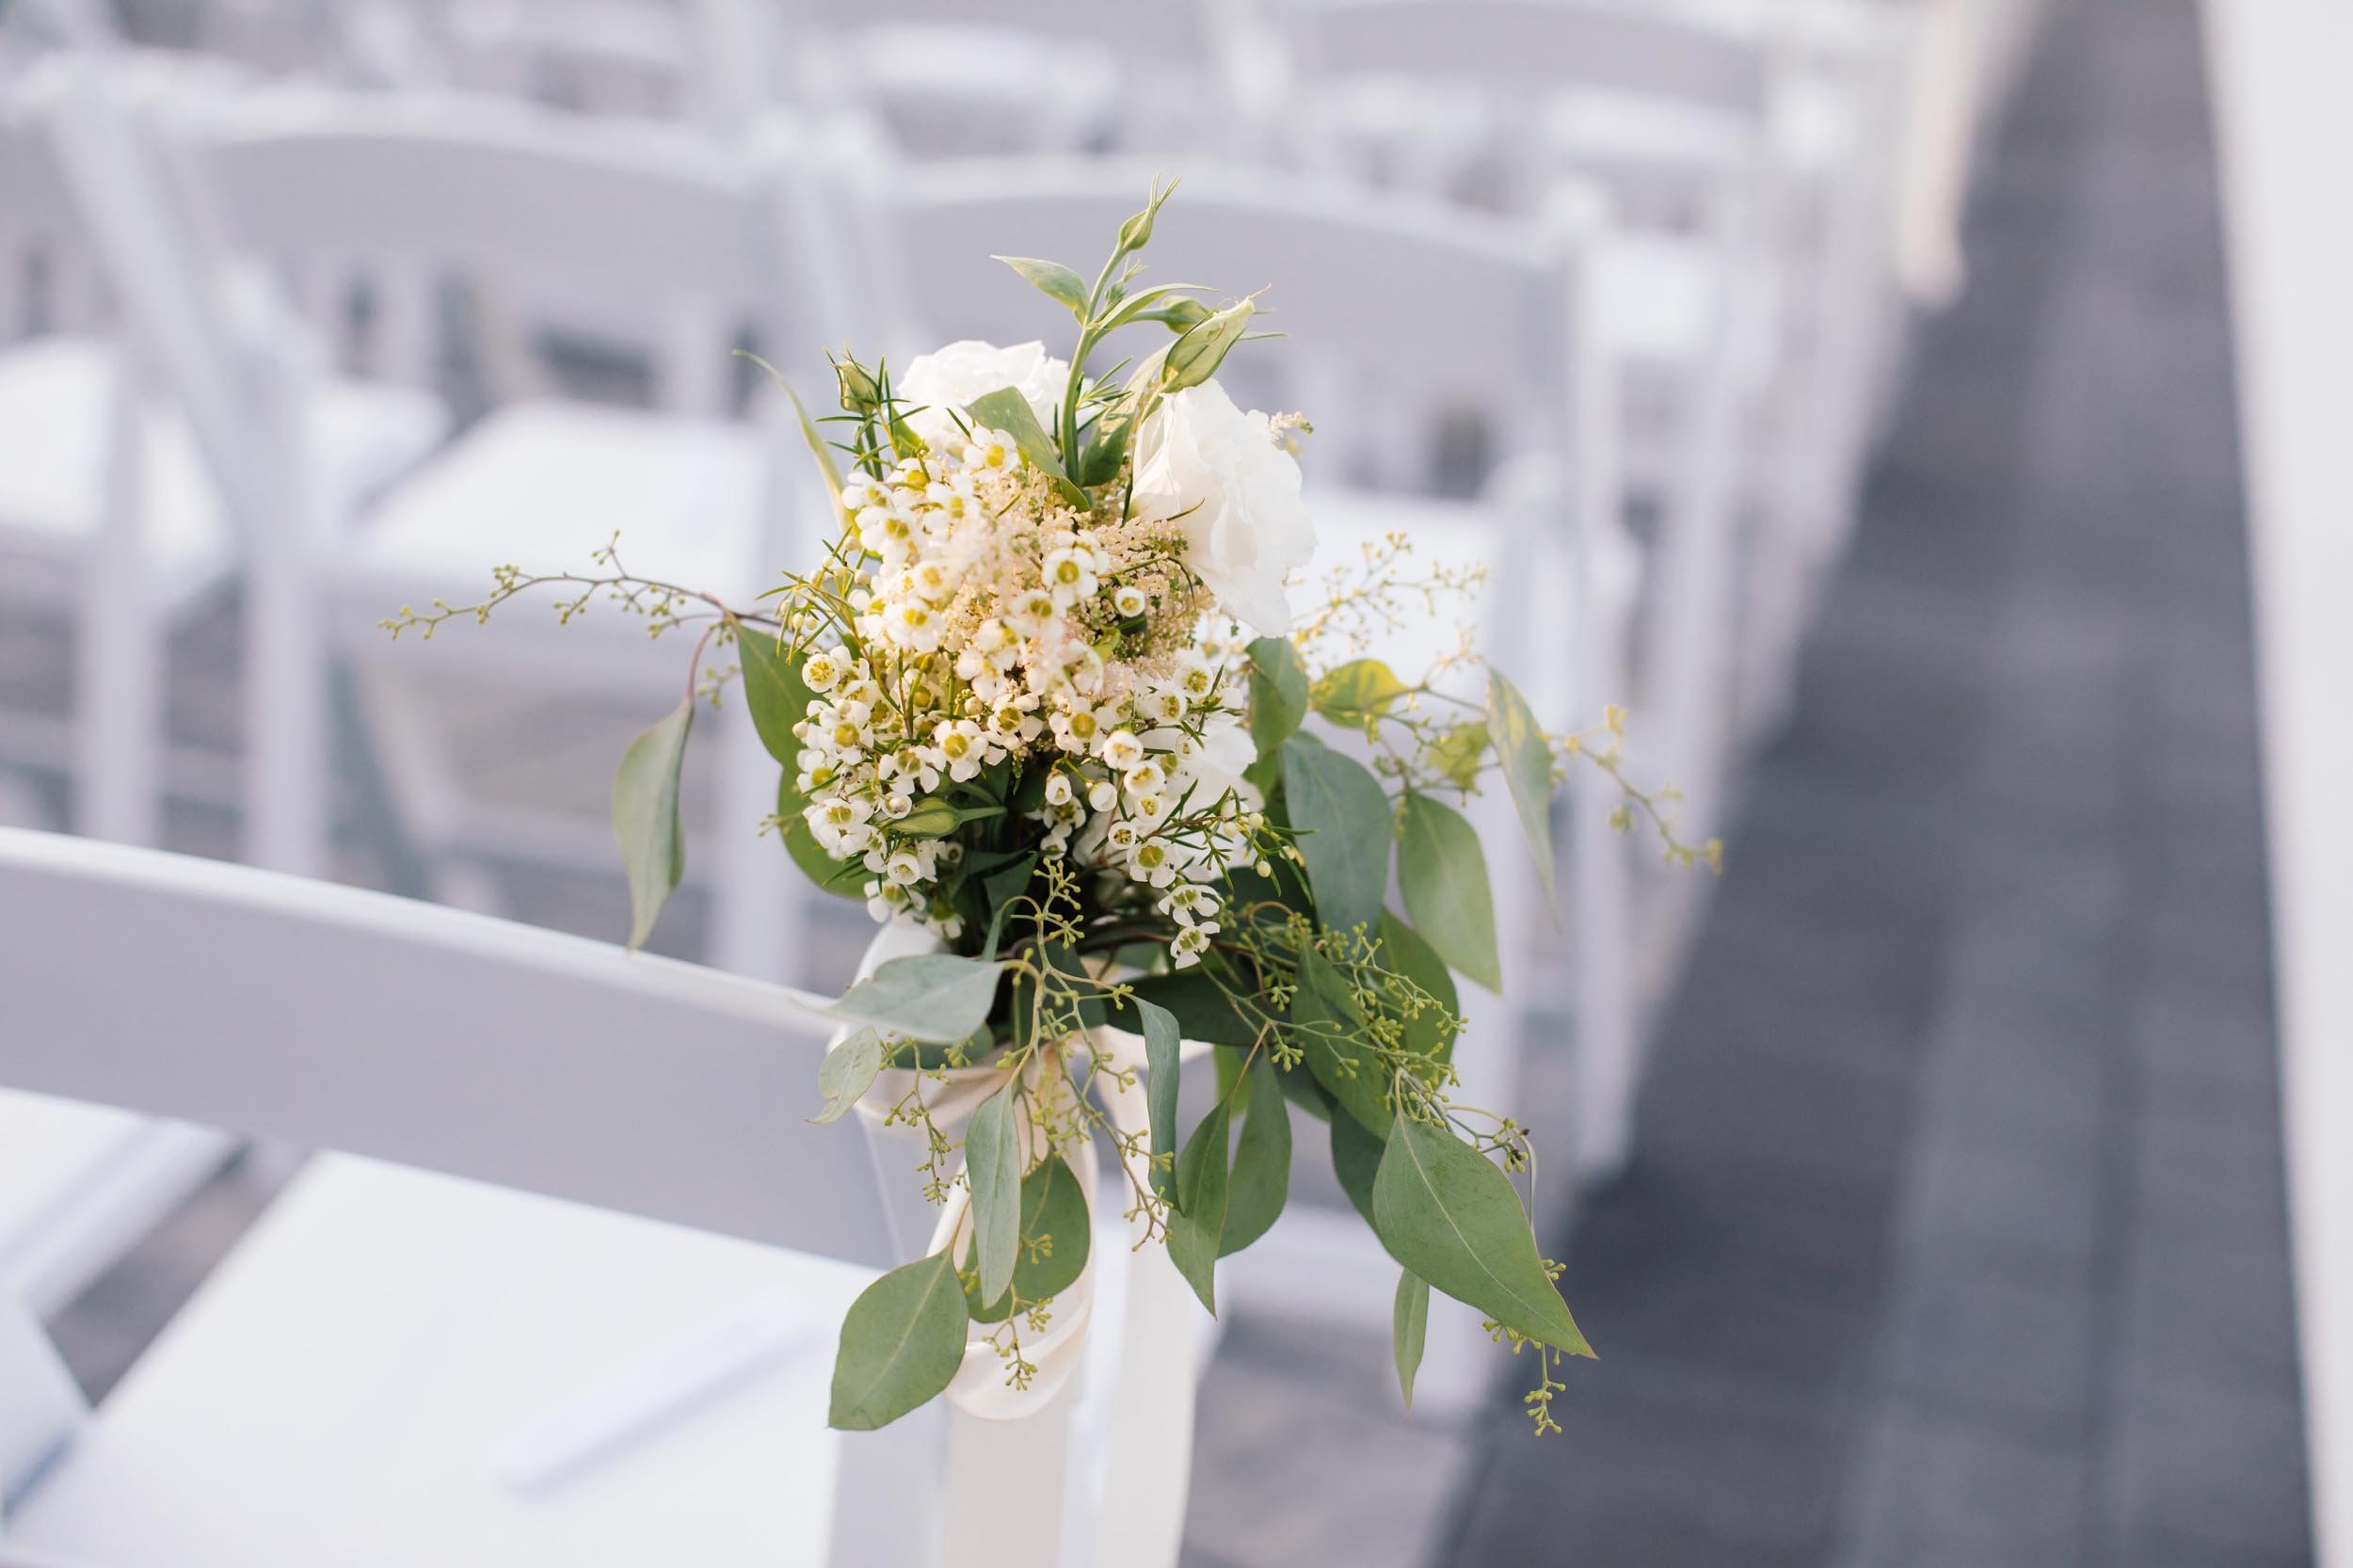 hengstenbergs-florist-weddings-love-story-marisa-nick-©BorisZaretskyPhotography-004.jpg